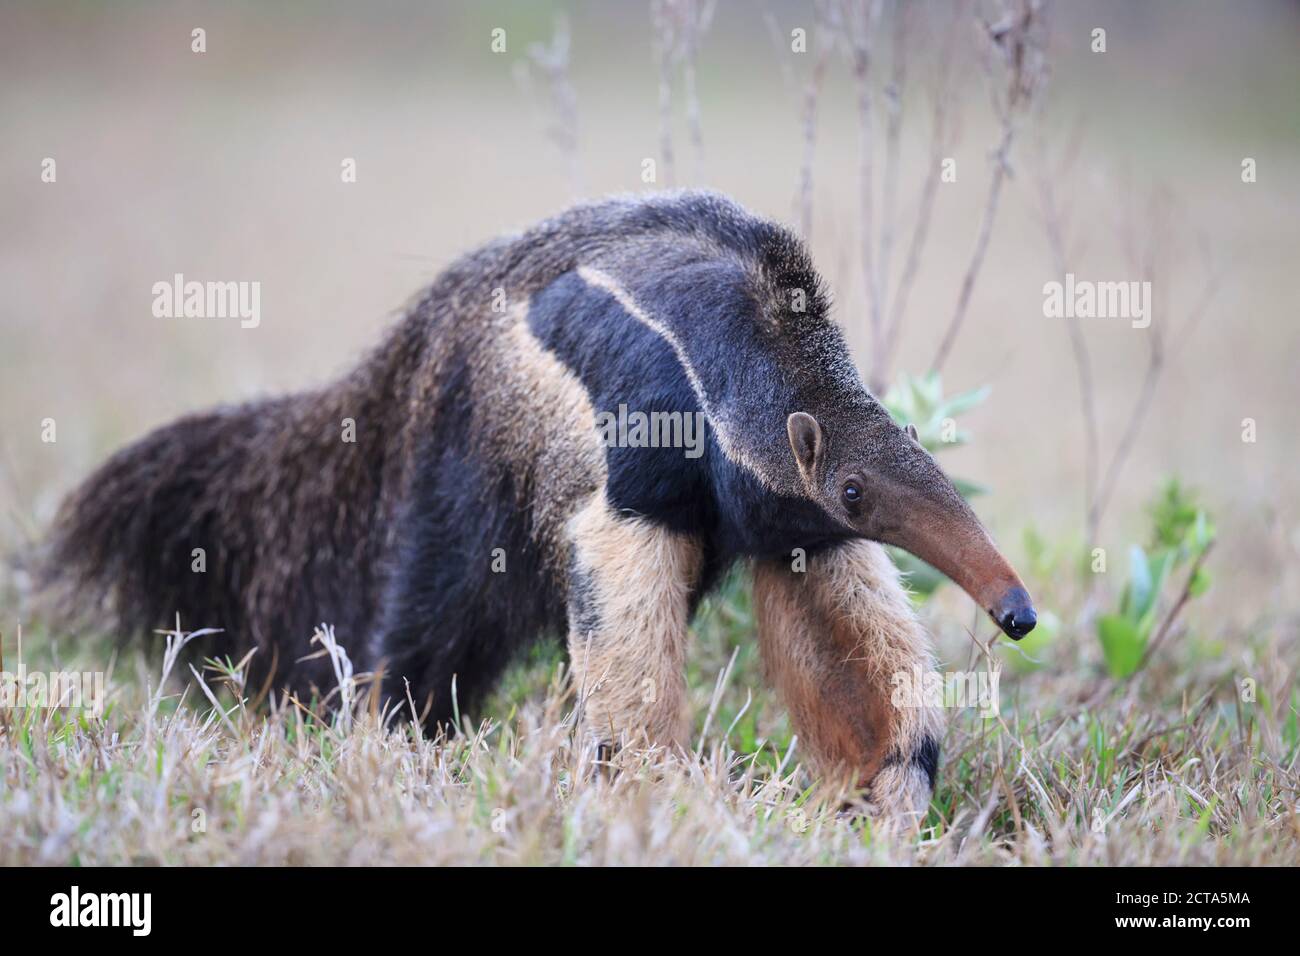 Brazil, Mato Grosso, Mato Grosso do Sul, Pantanal, giant anteater Stock Photo